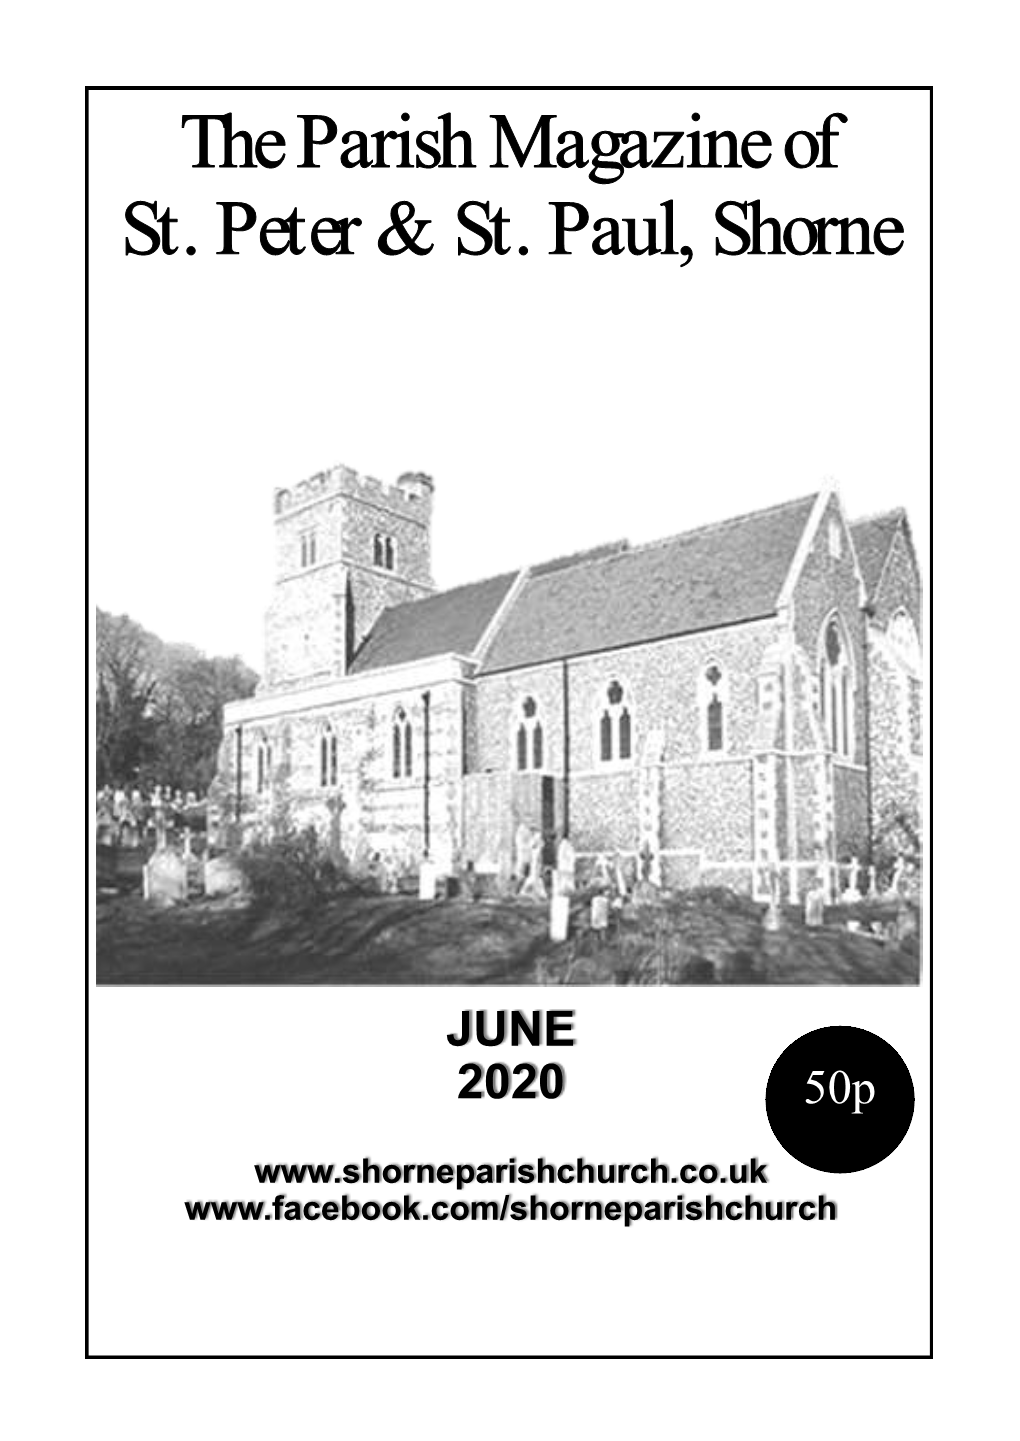 The Parish Magazine of St. Peter & St. Paul, Shorne